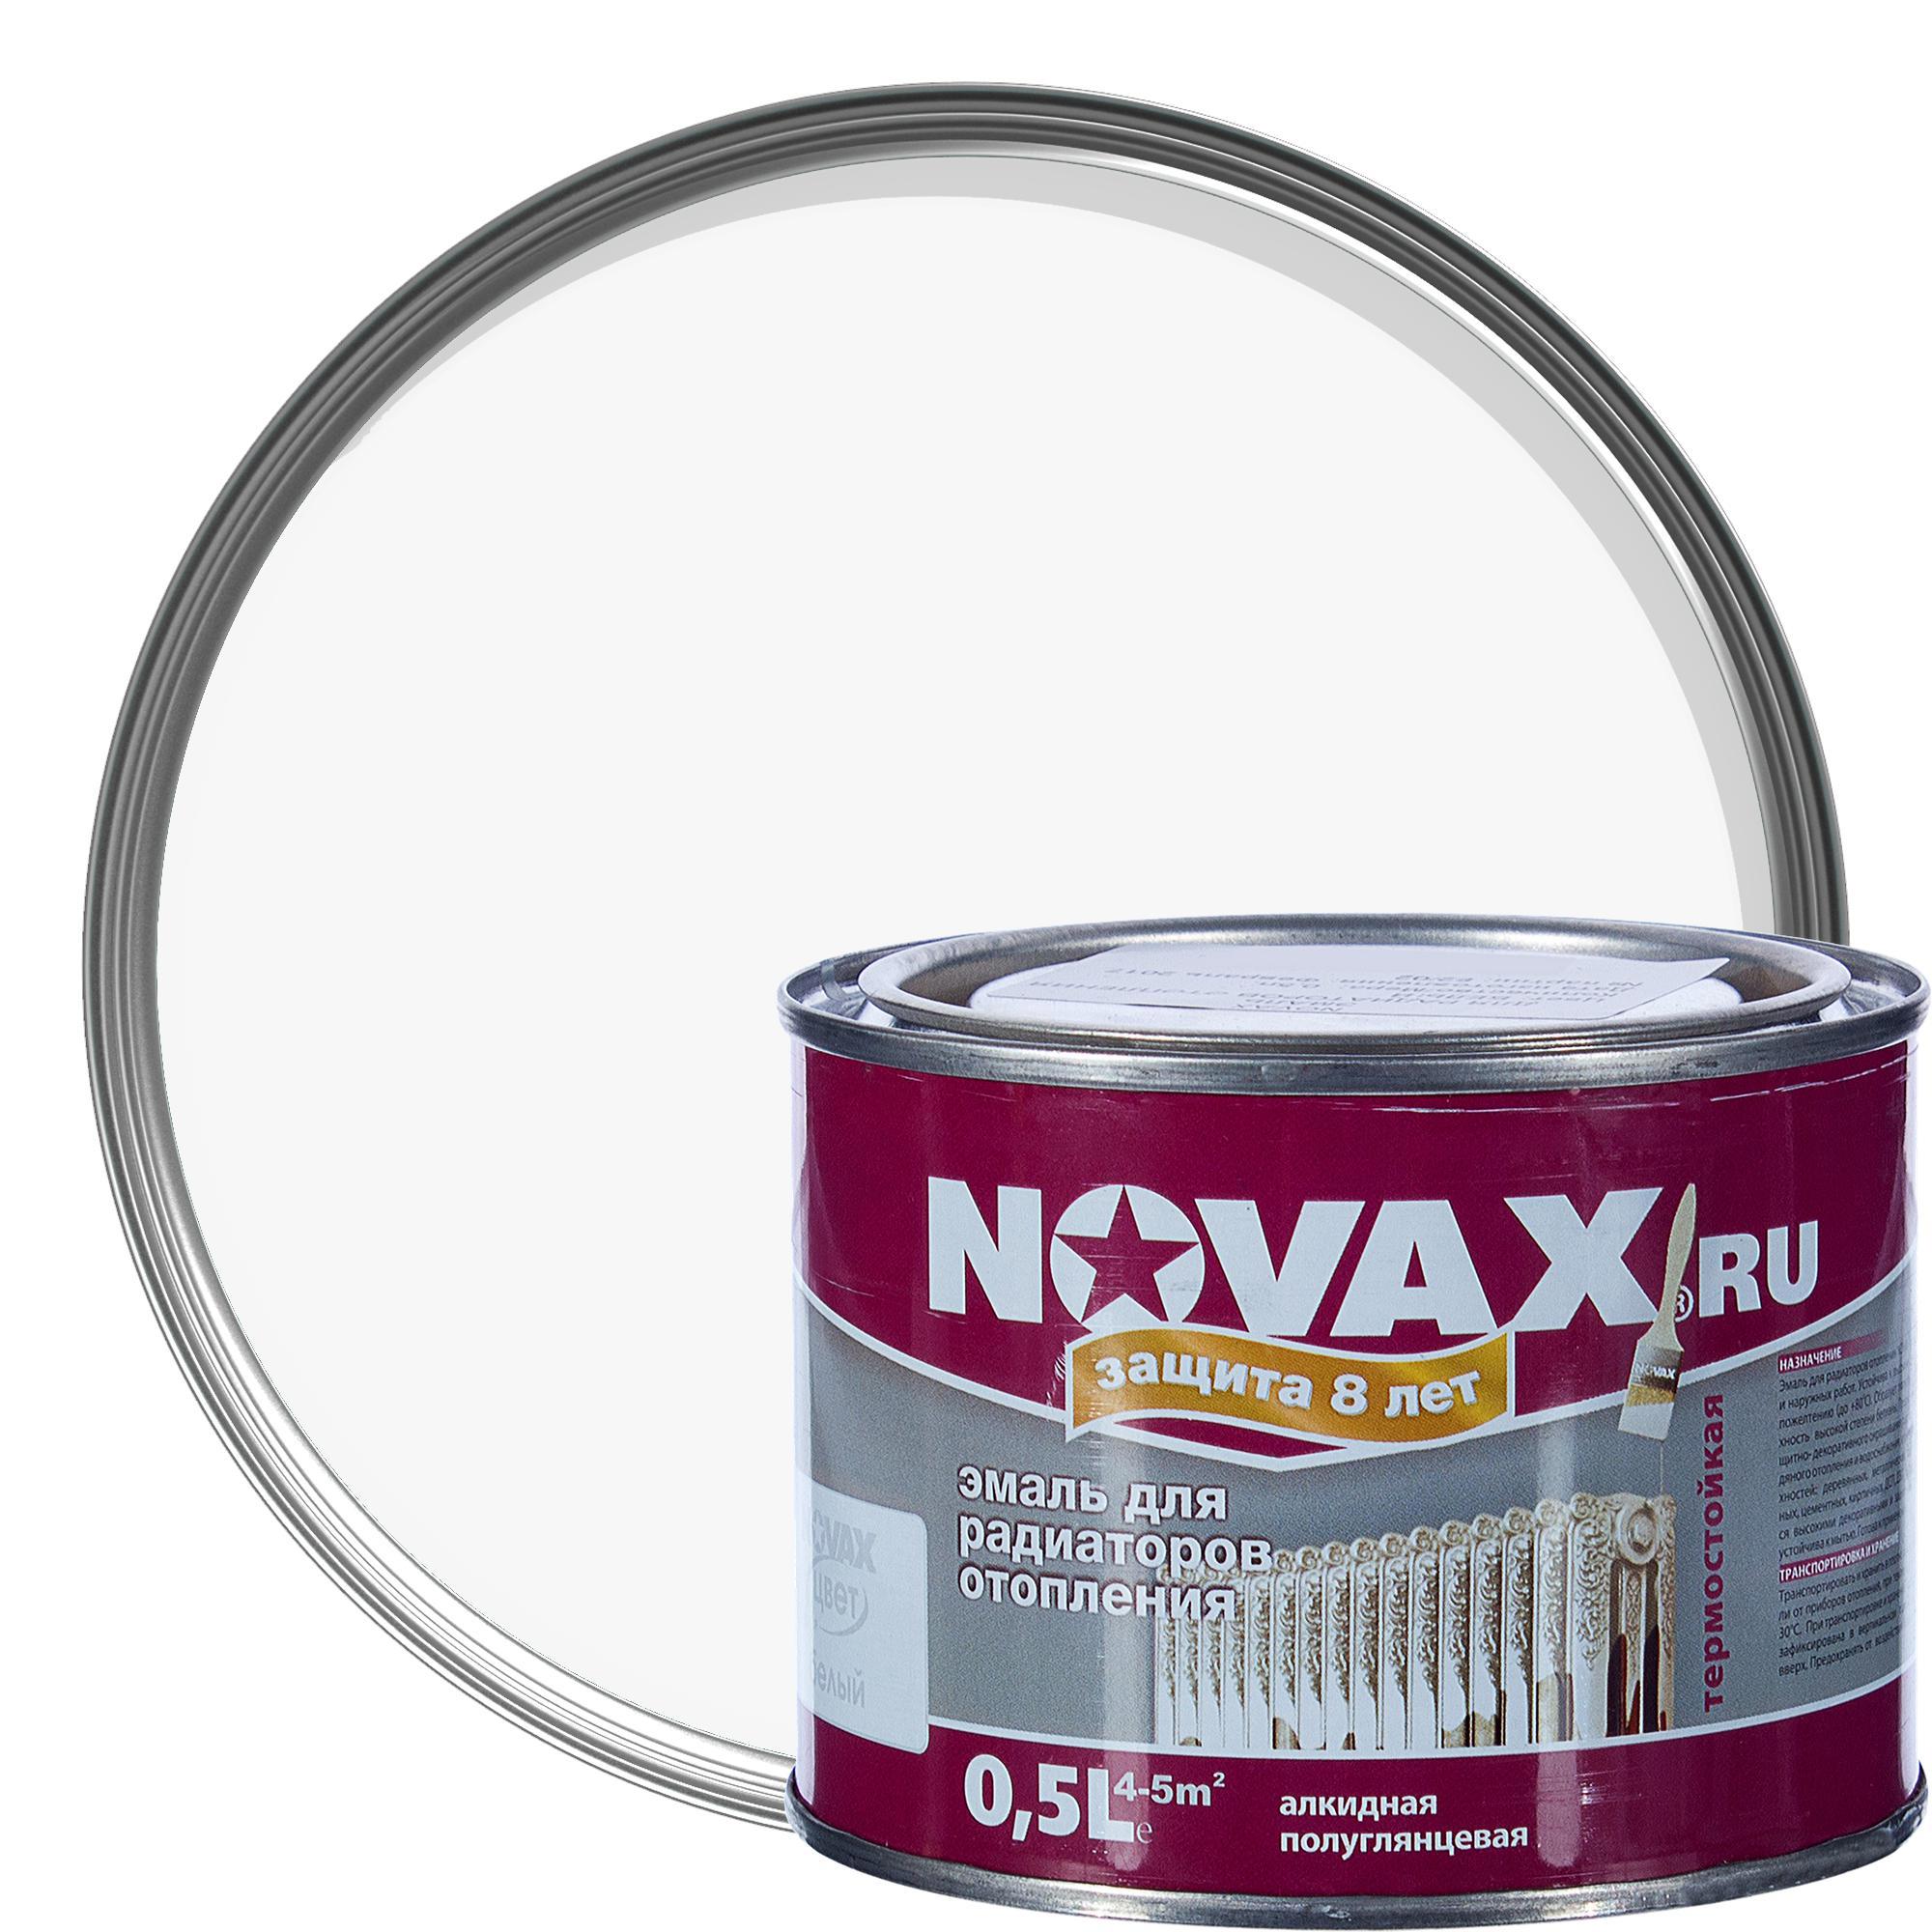 Краска для радиаторов купить. Эмаль для радиаторов Novax цвет белый 0.5 л. Краска Новакс для радиаторов. Эмаль для радиаторов Novax 3л. Parade line эмаль для радиаторов отопления.